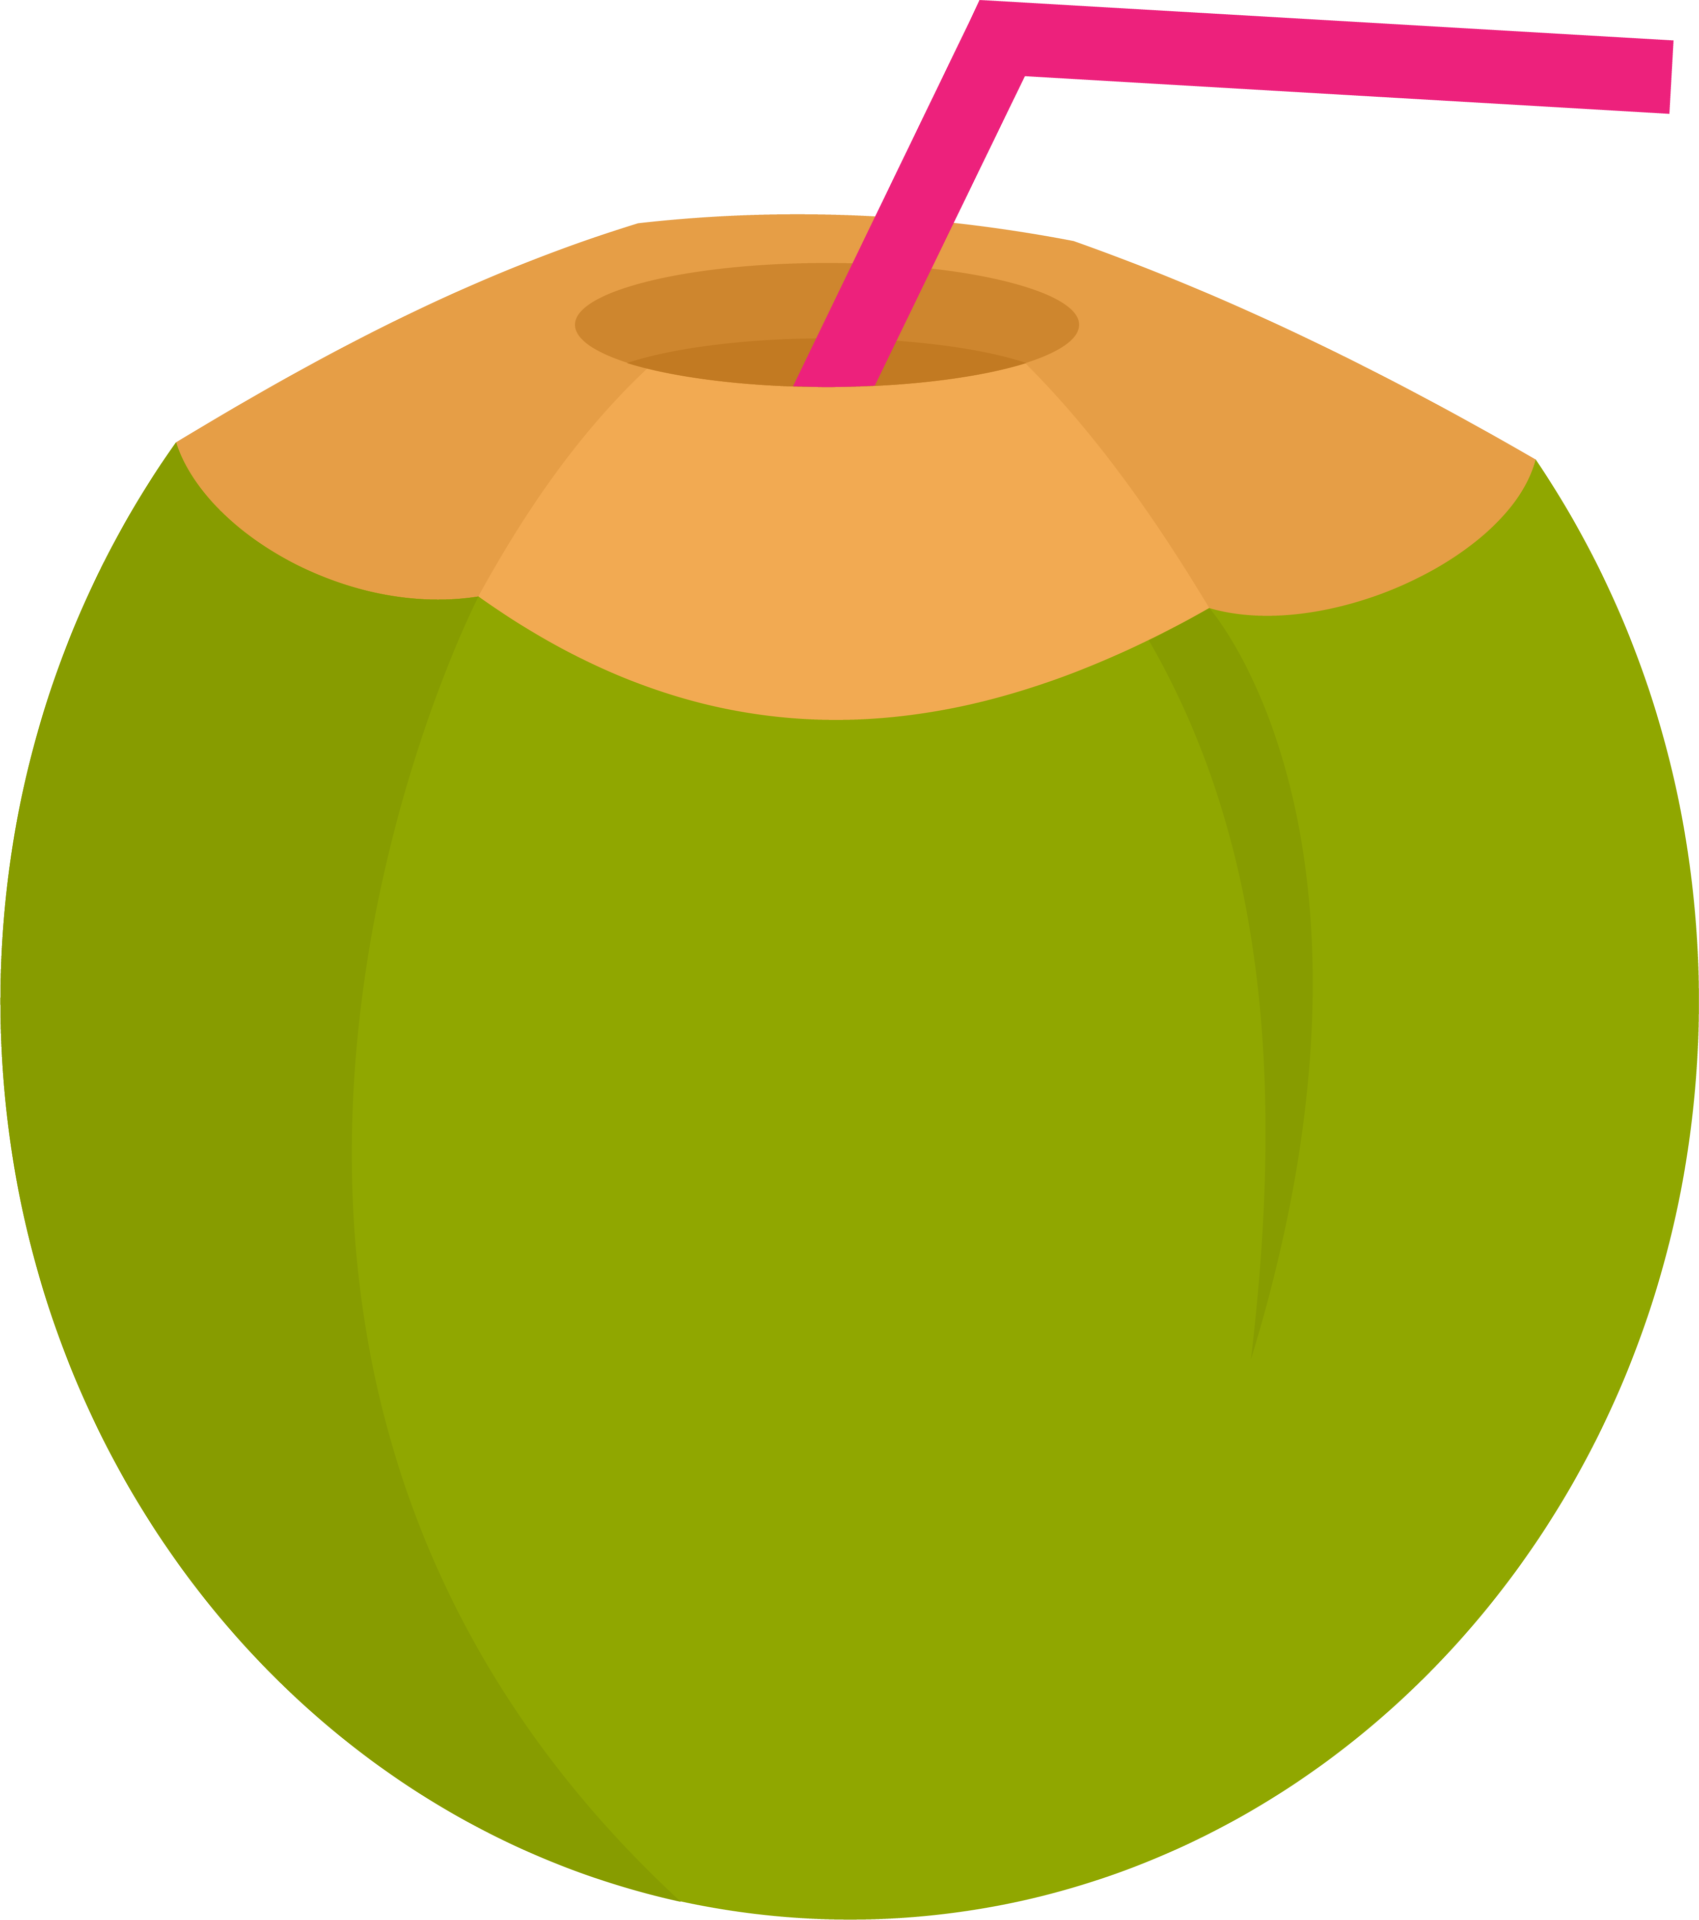 straw in a coconut icon